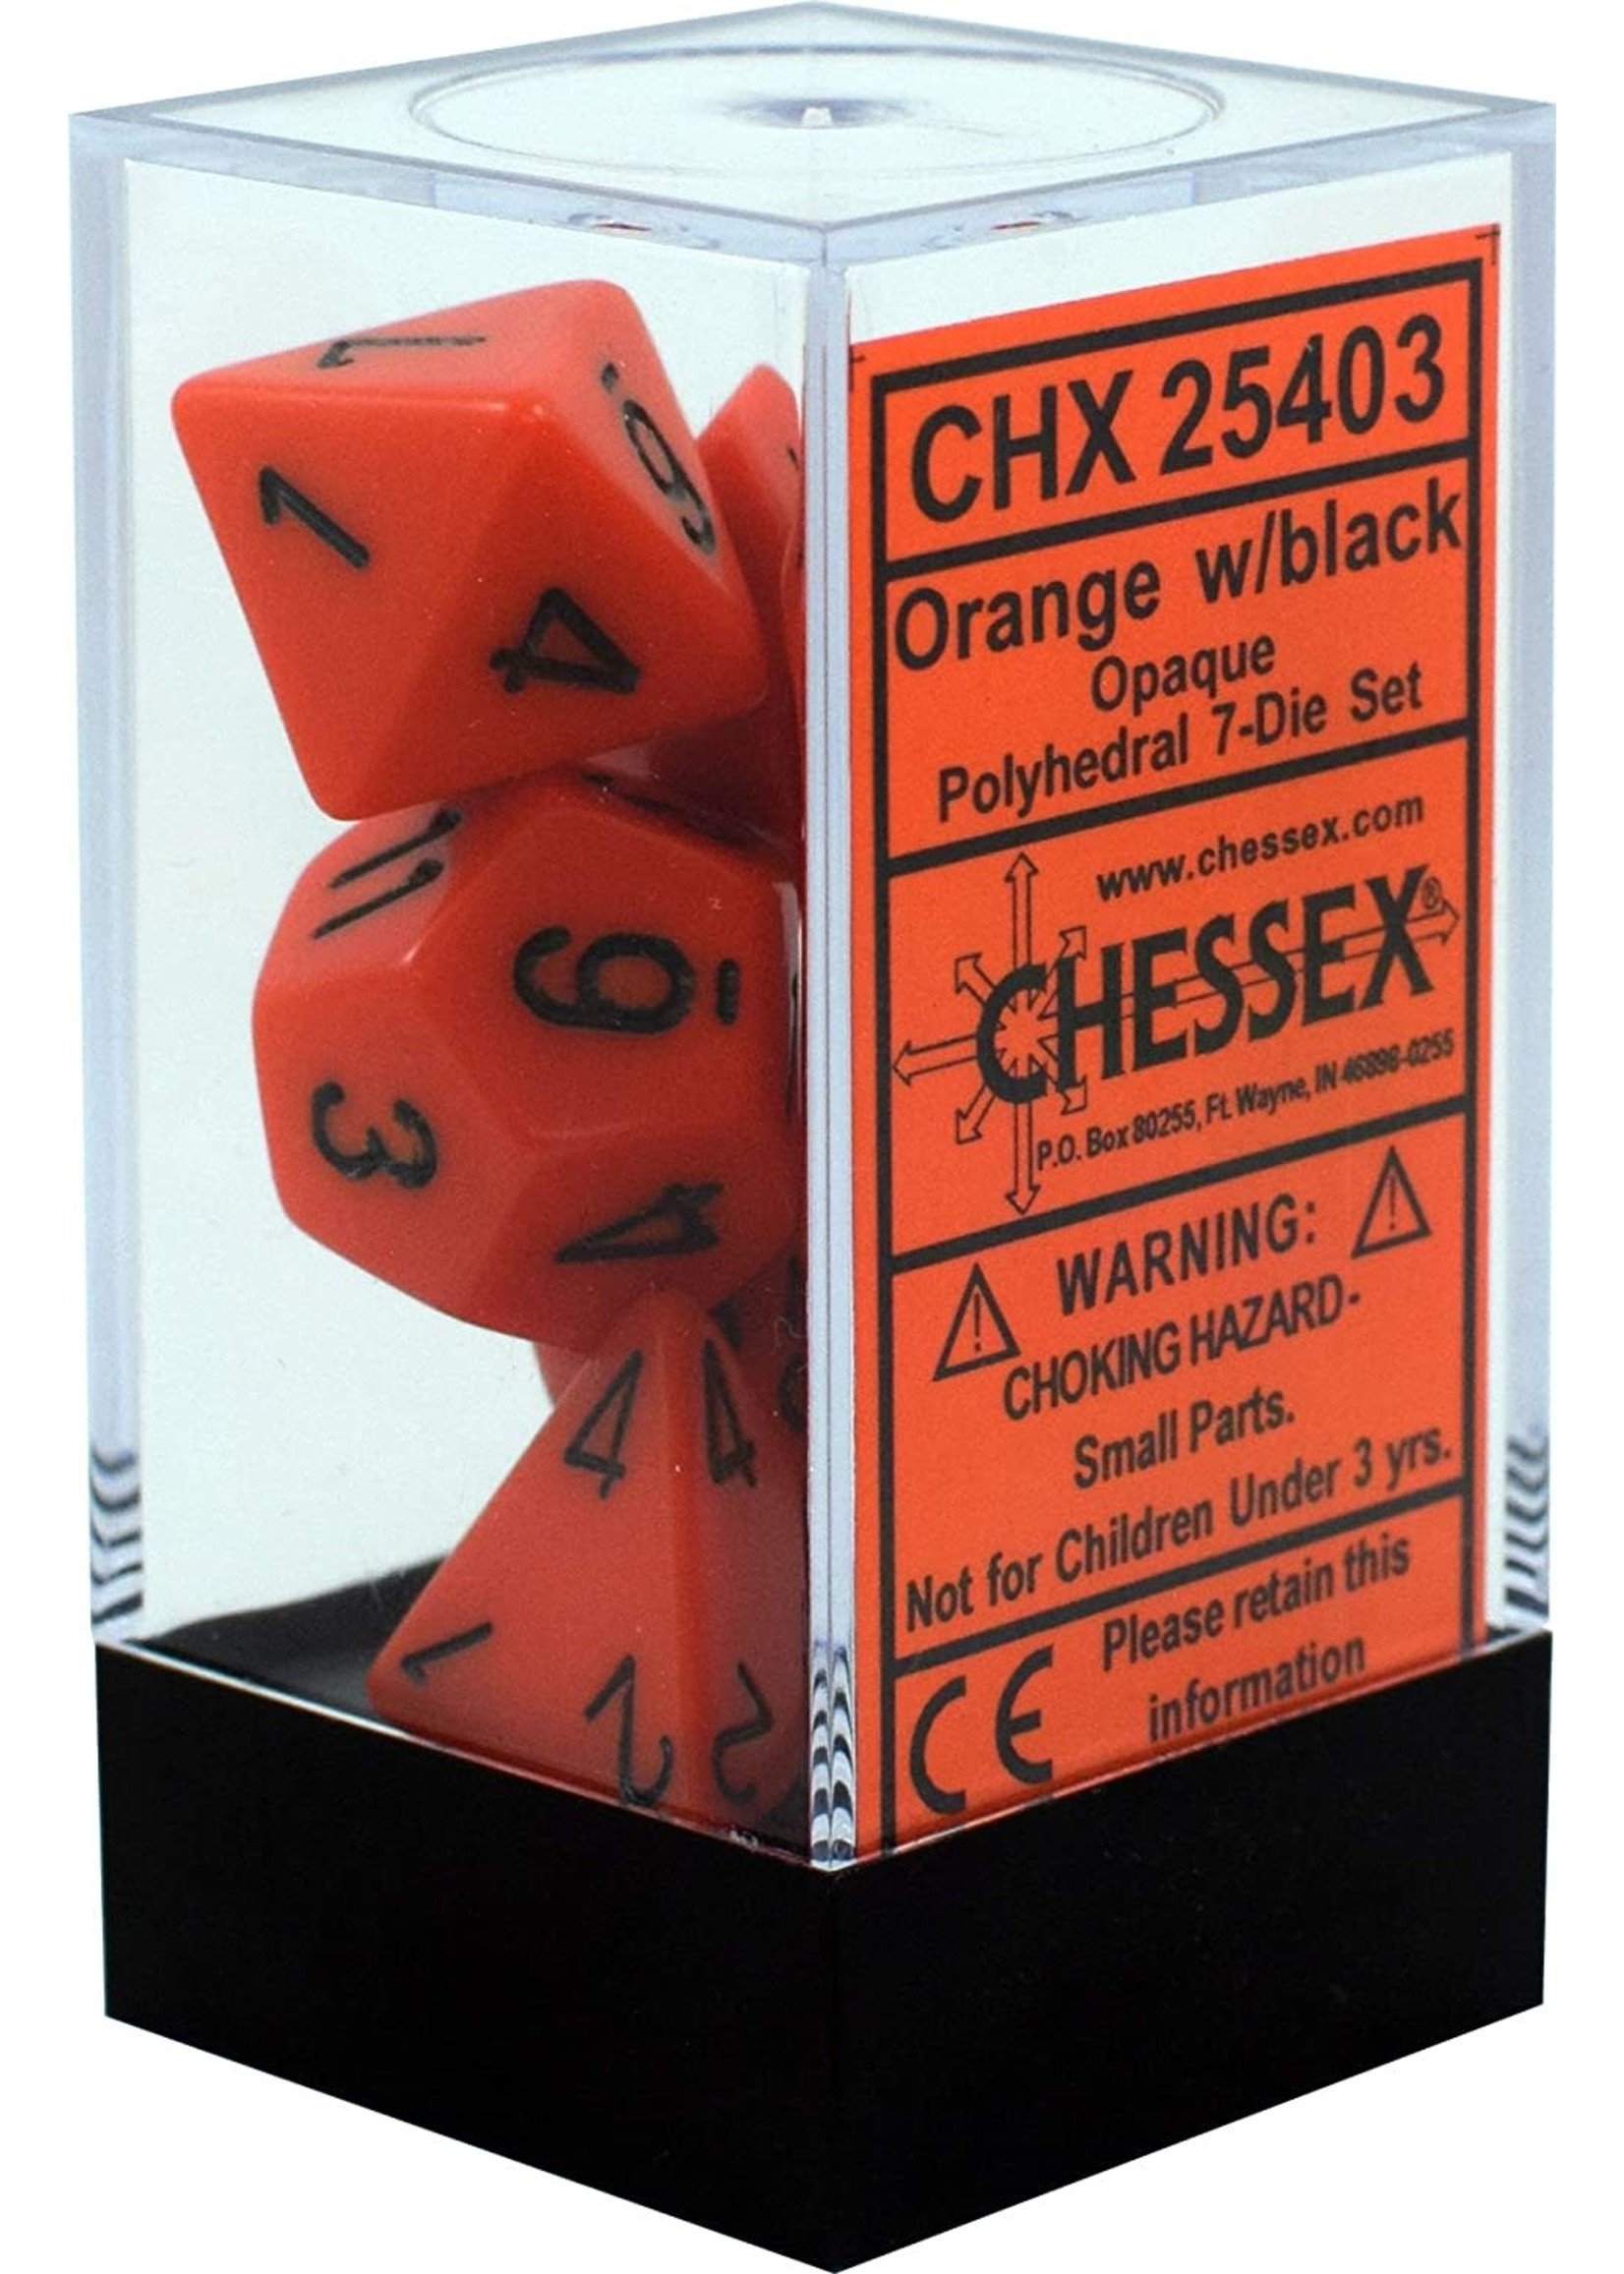 Chessex Opaque Poly 7 set: Orange w/ Black